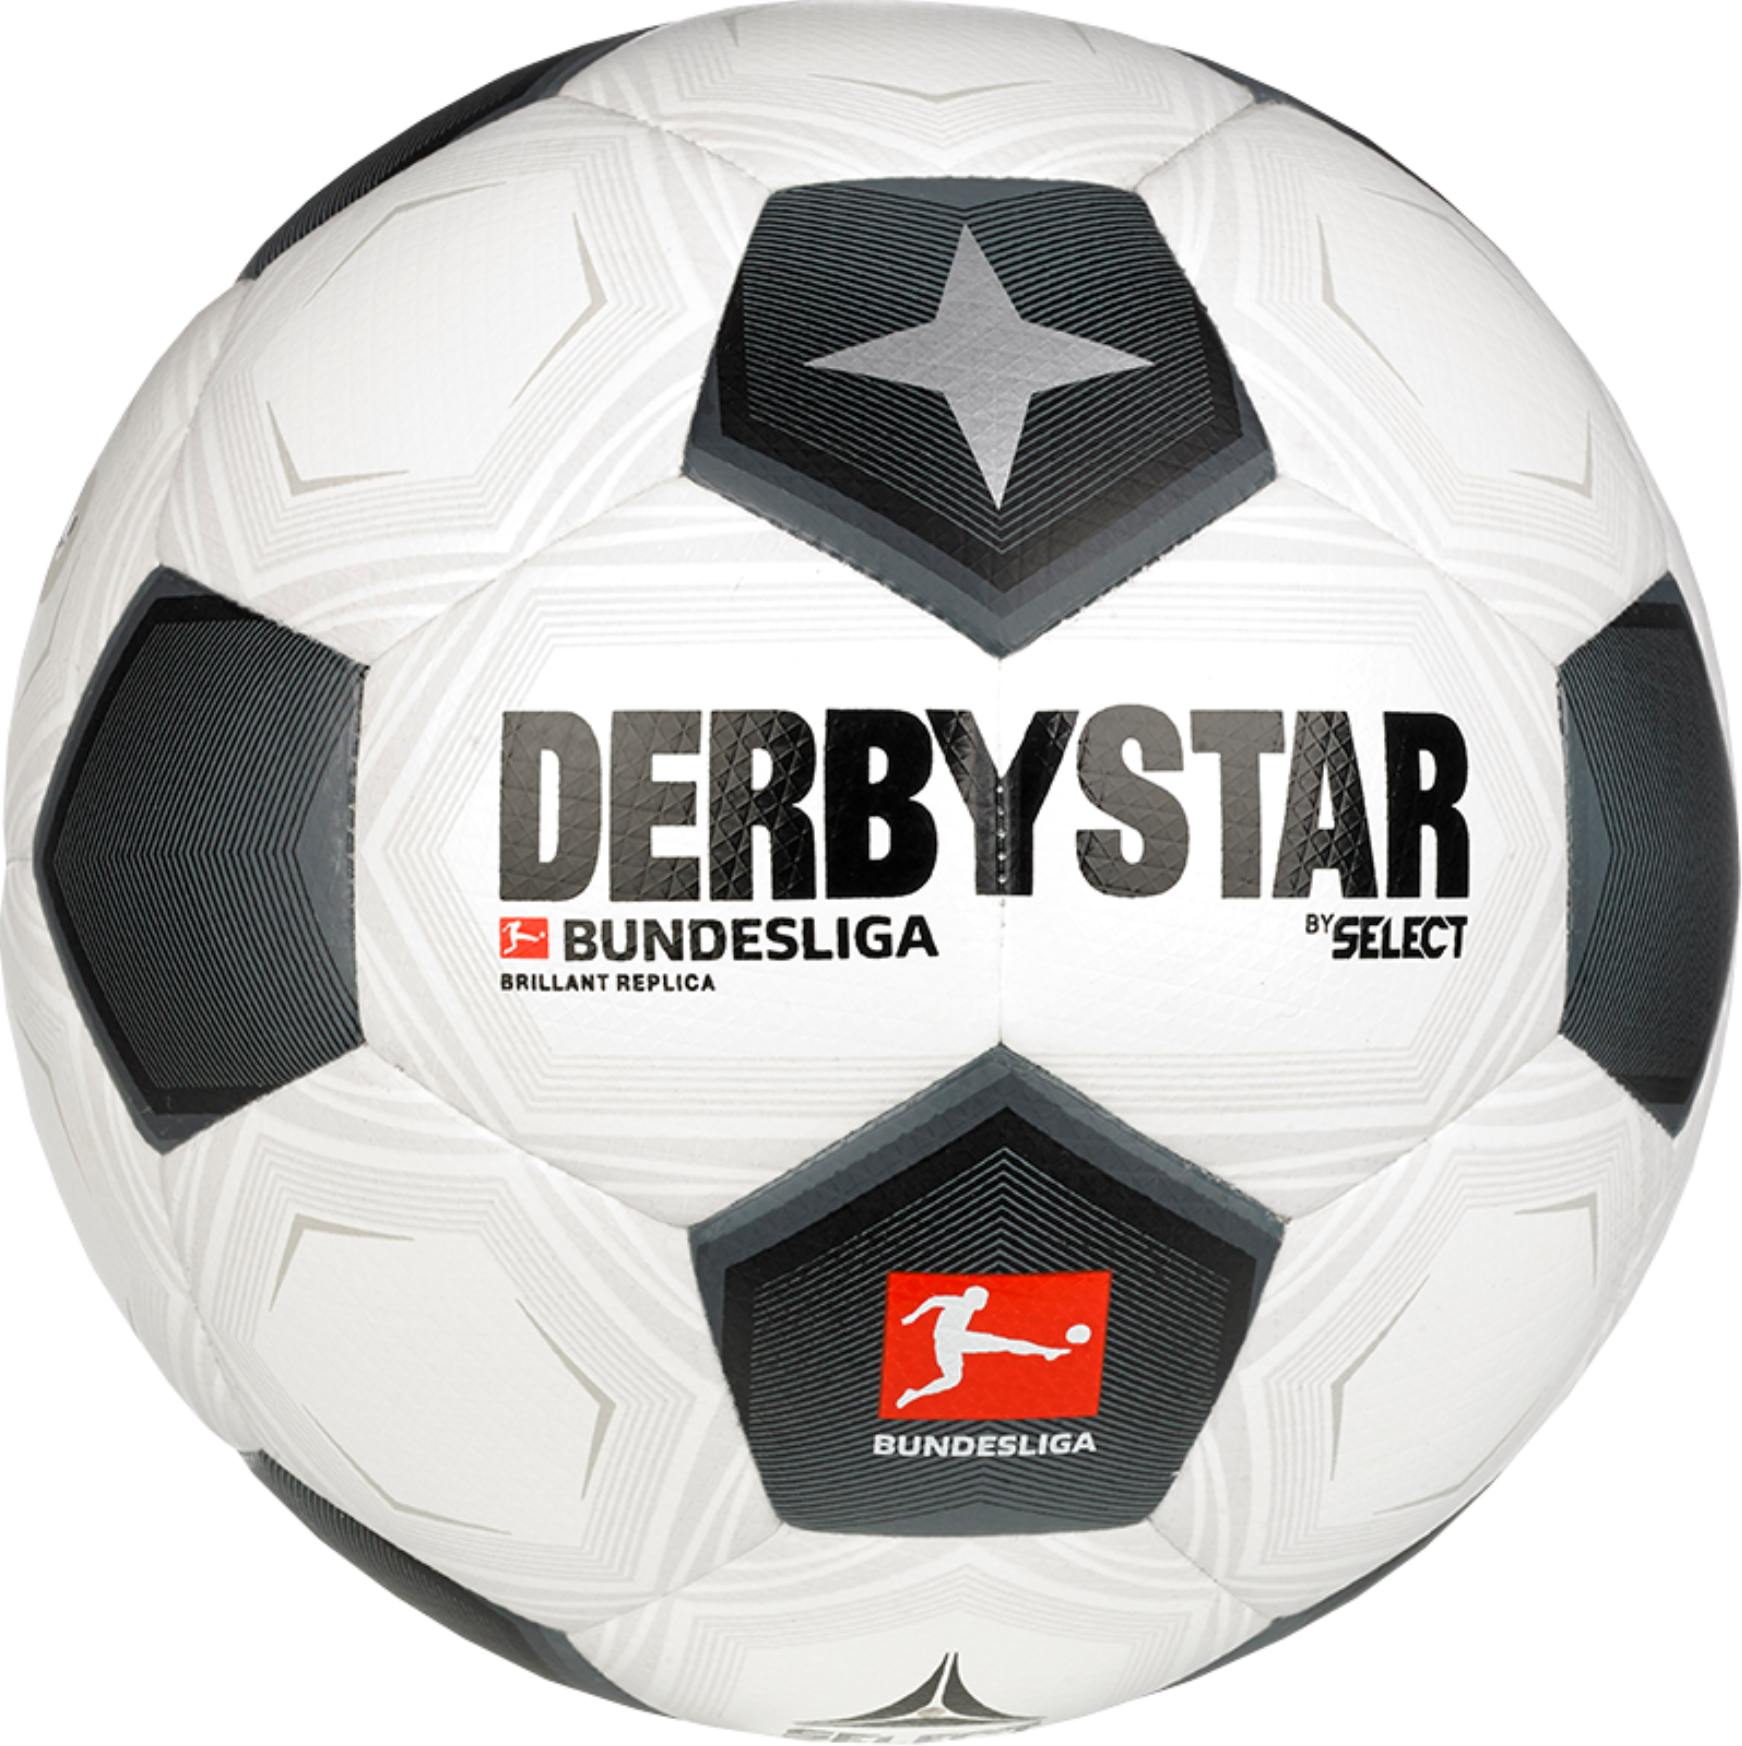 Lopta Derbystar Bundesliga Brillant Replica Classic v23